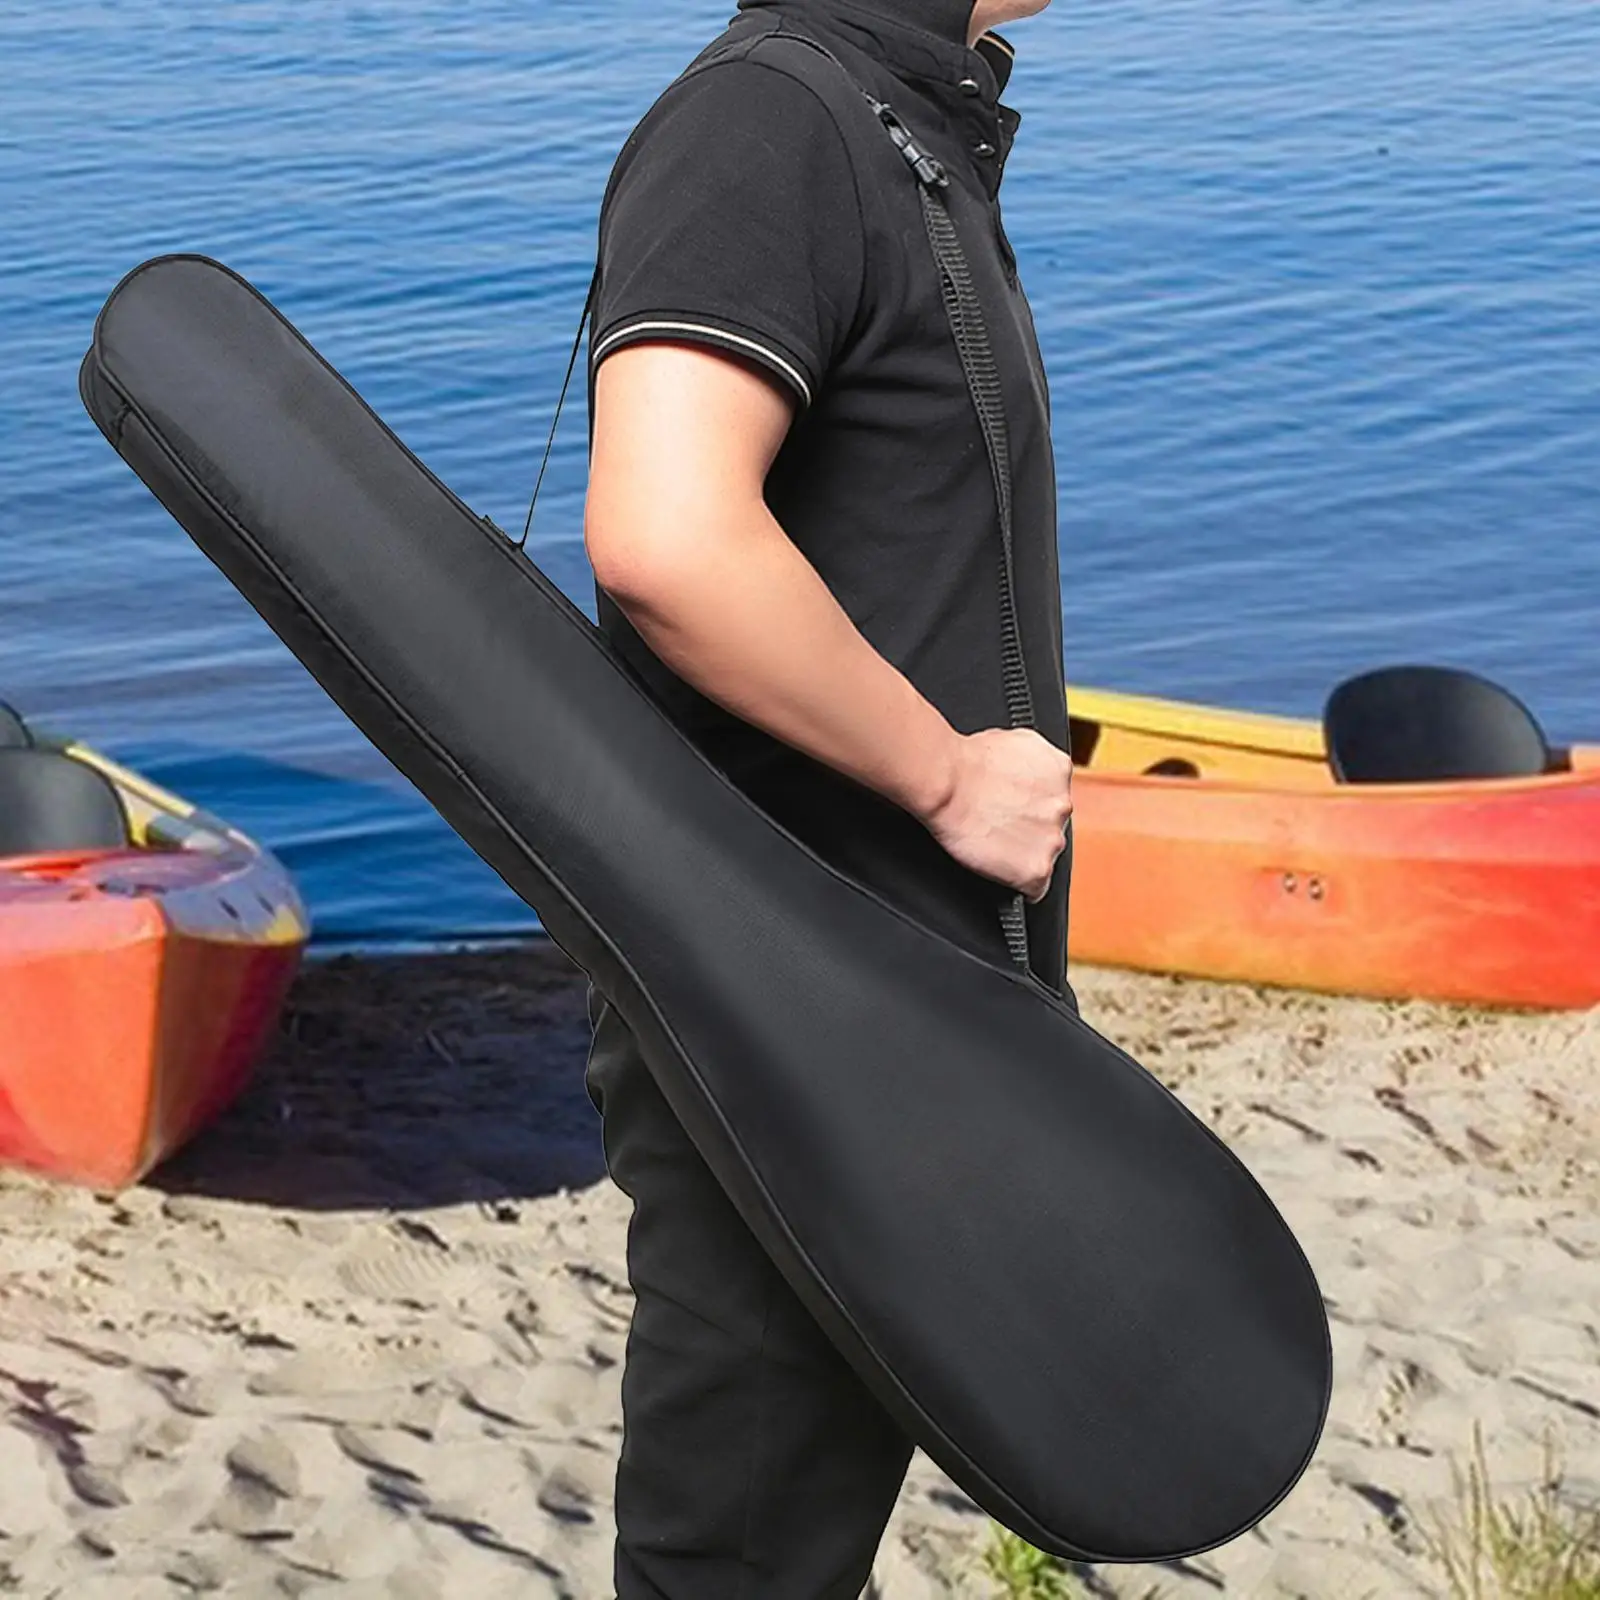 Kayak Paddle Bag for Split Paddle Kayaking Paddle Transportation Bag Canoe Paddle Bag Portable Protector Paddle Carrier Bag